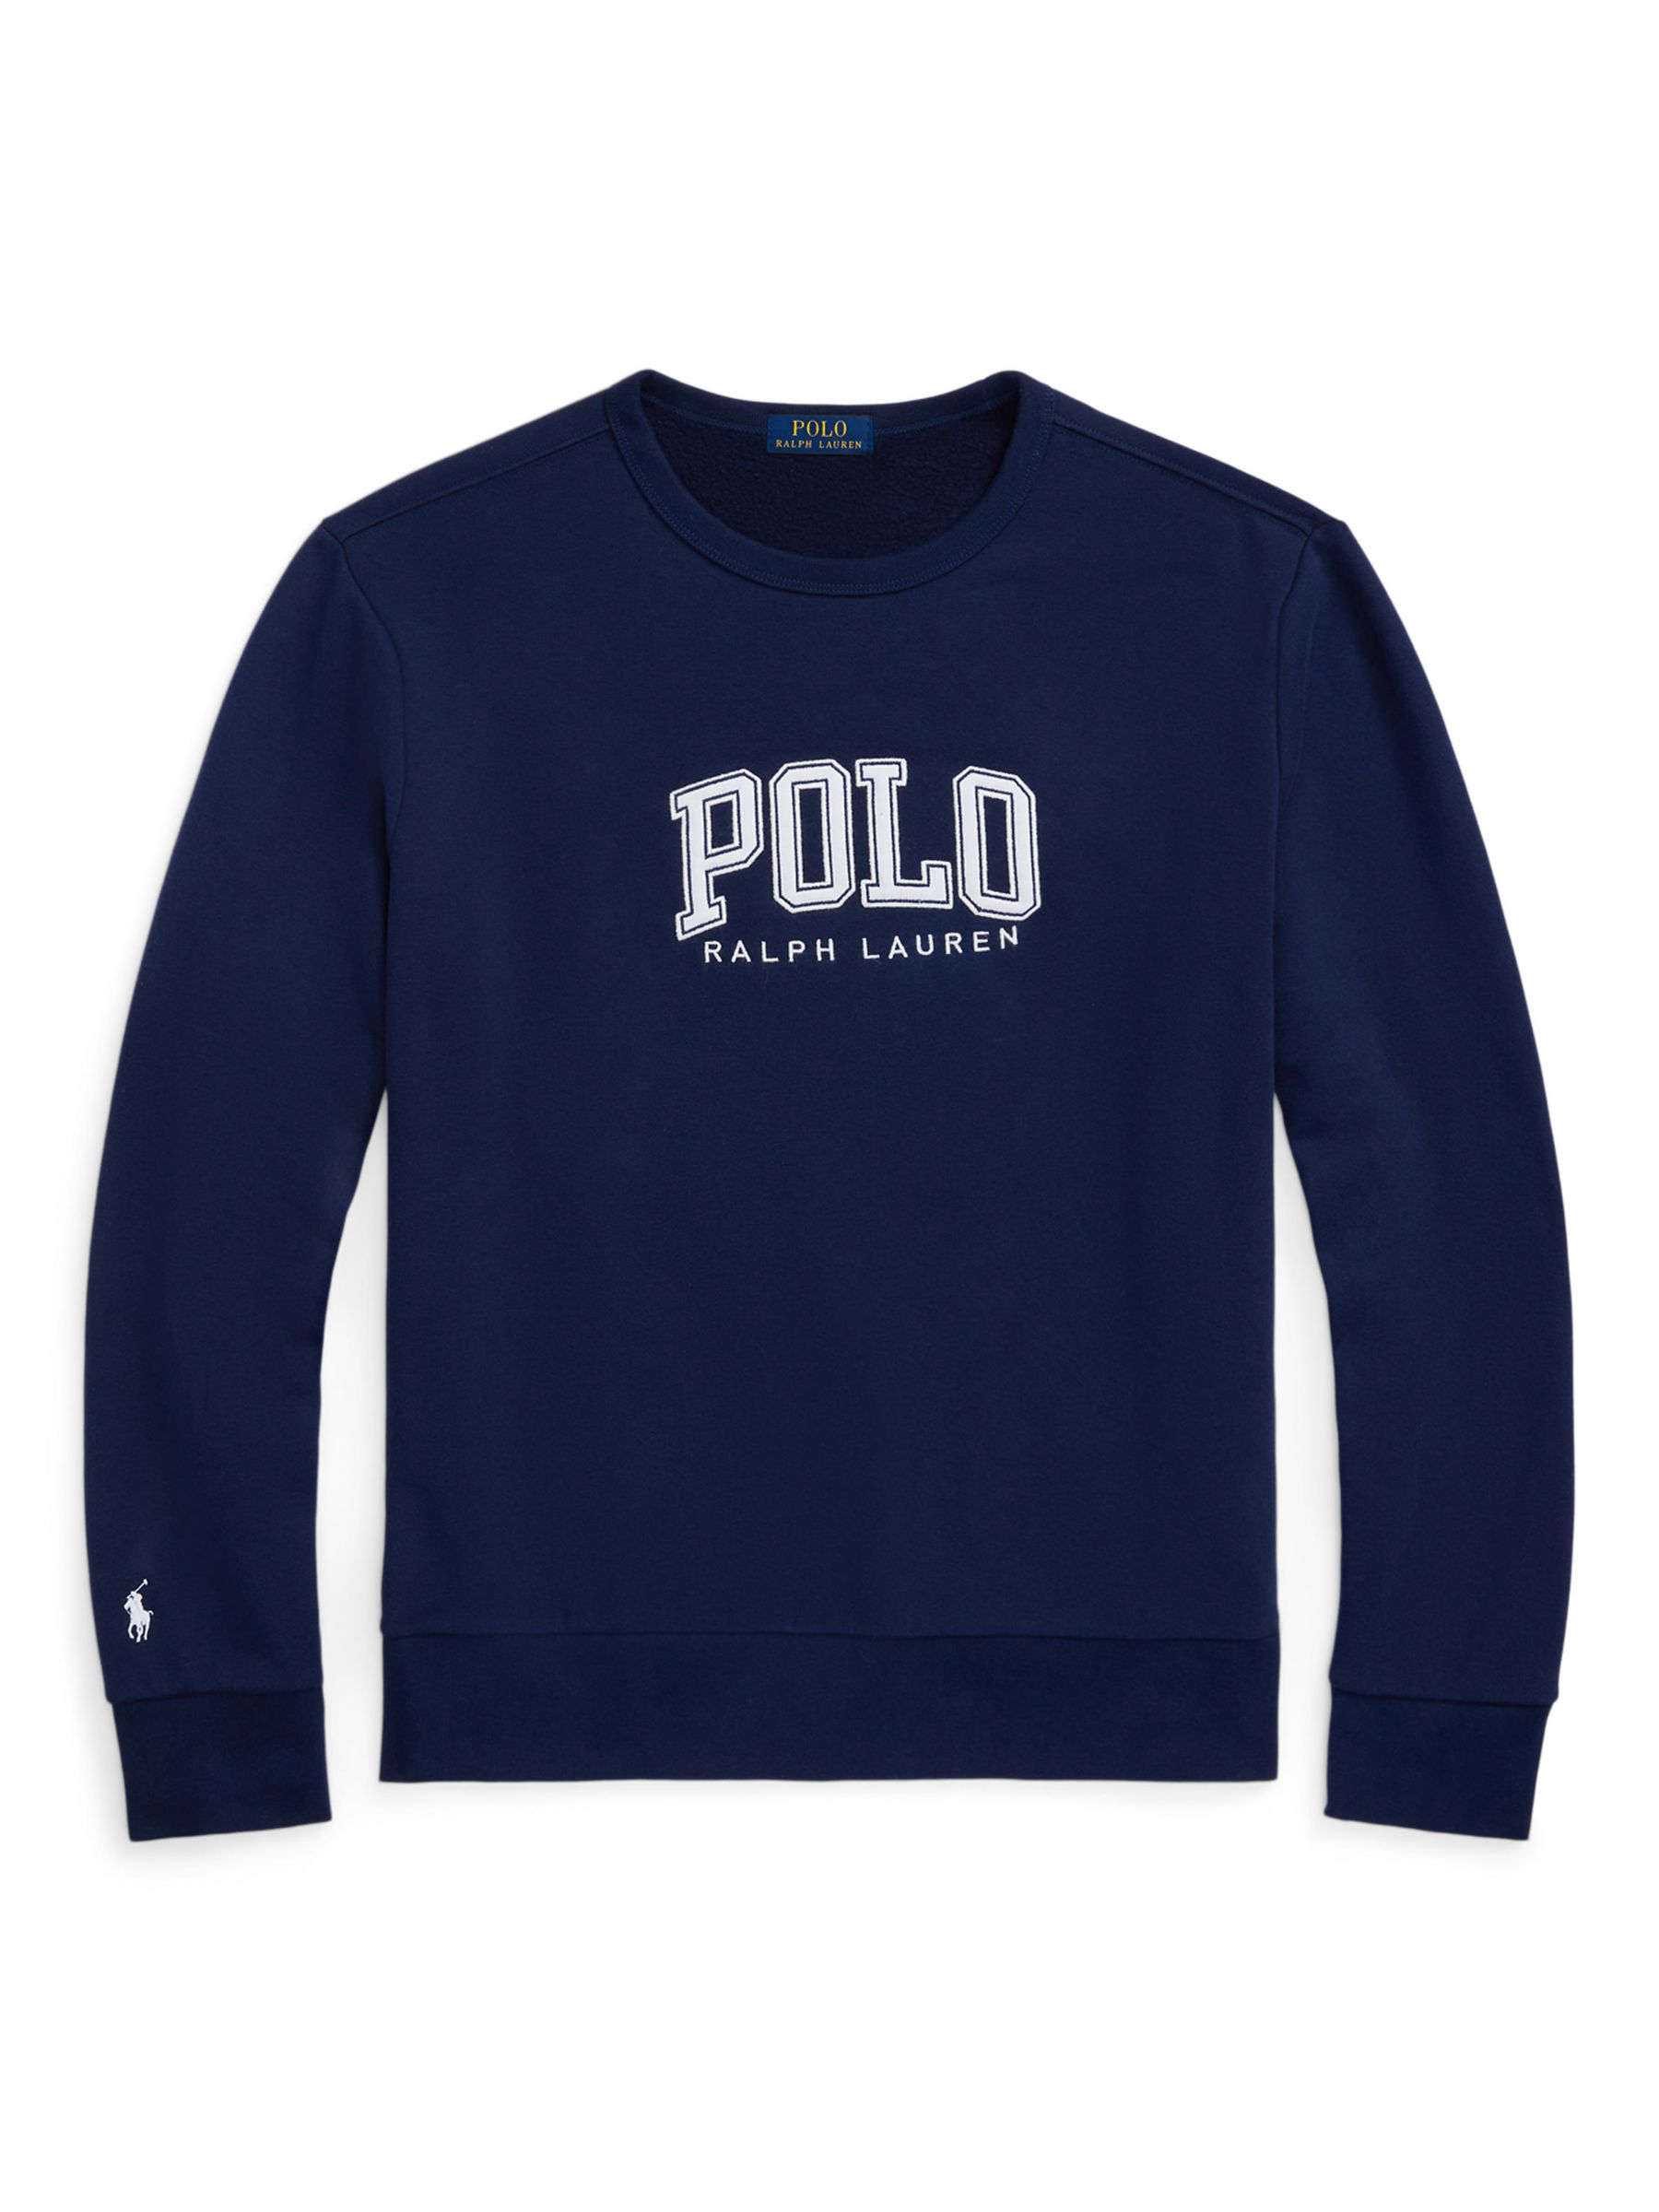 Buy Ralph Lauren Polo Logo Embroidered Sweatshirt, Cruise Navy Online at johnlewis.com